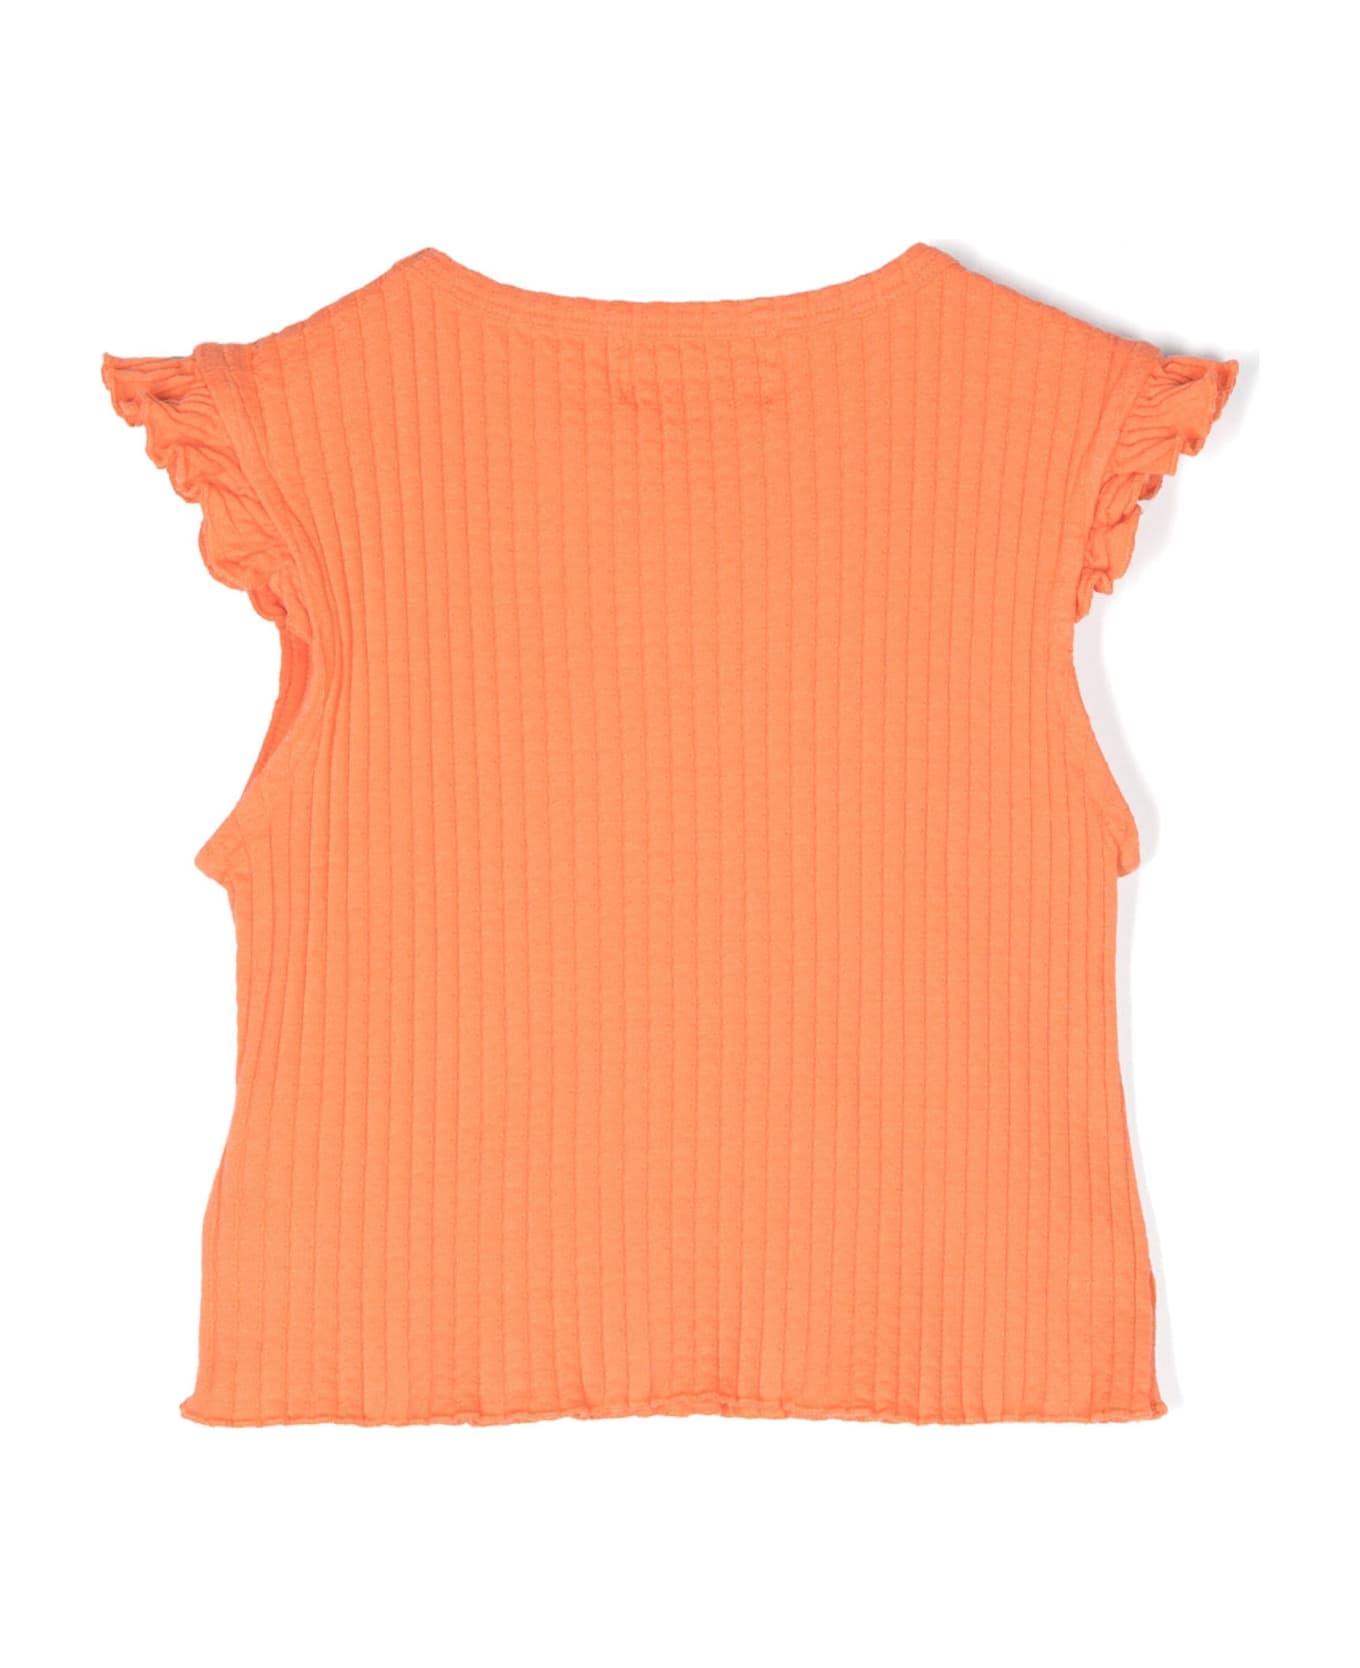 Bobo Choses Orange Top For Girl With Logo - Orange トップス